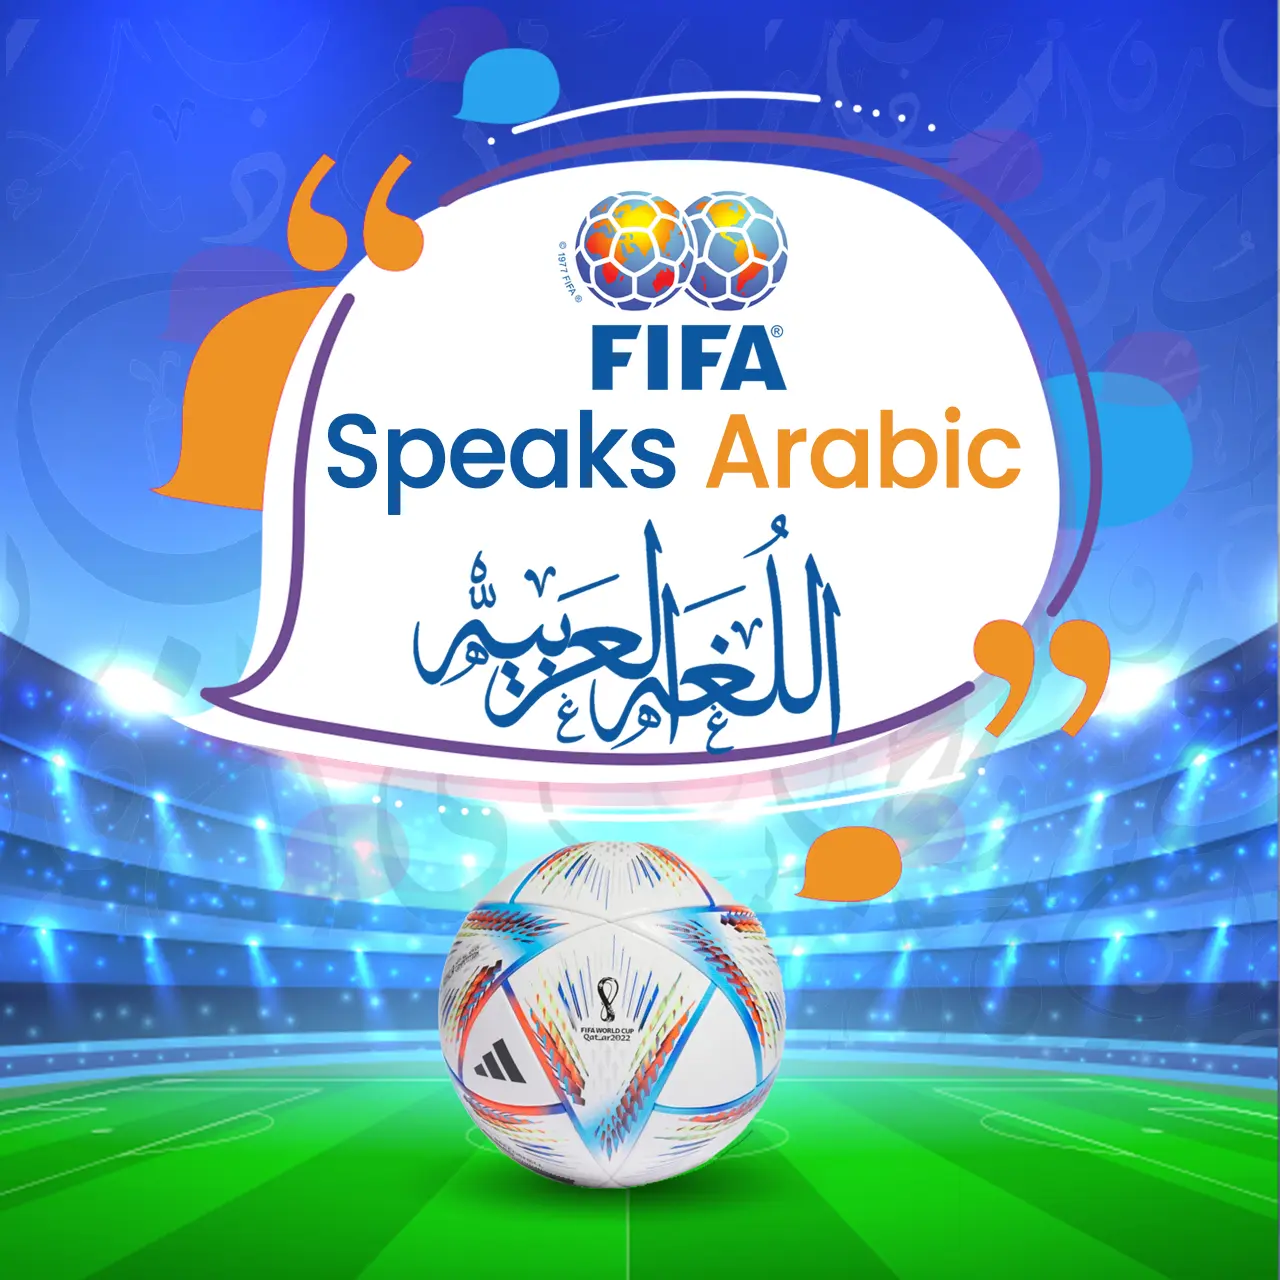 FIFA speaks Arabic 3